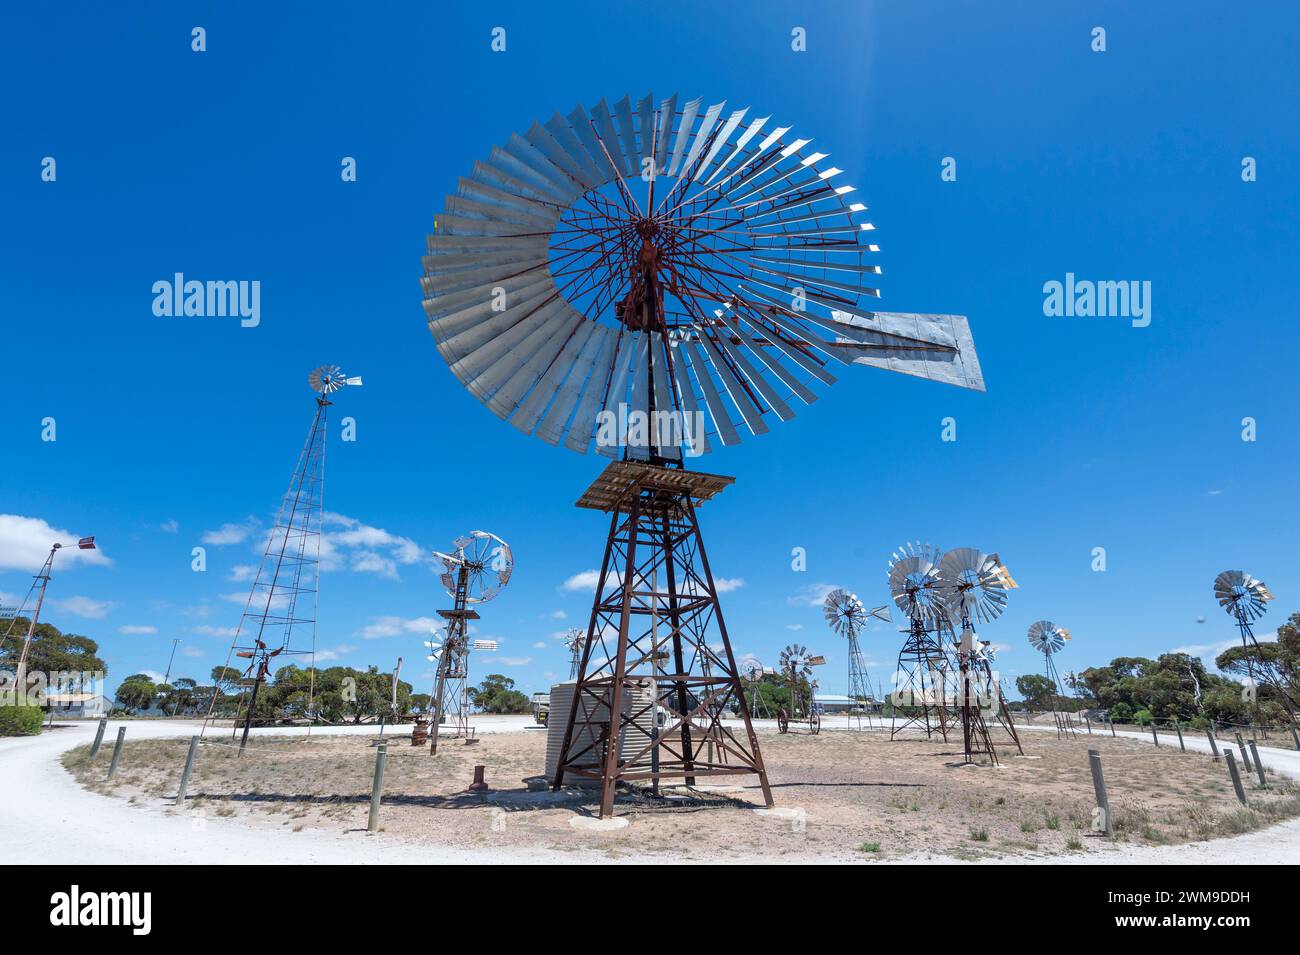 Australia biggest windmill on display at the Penong Windmill Museum. South Australia, SA, Australia Stock Photo